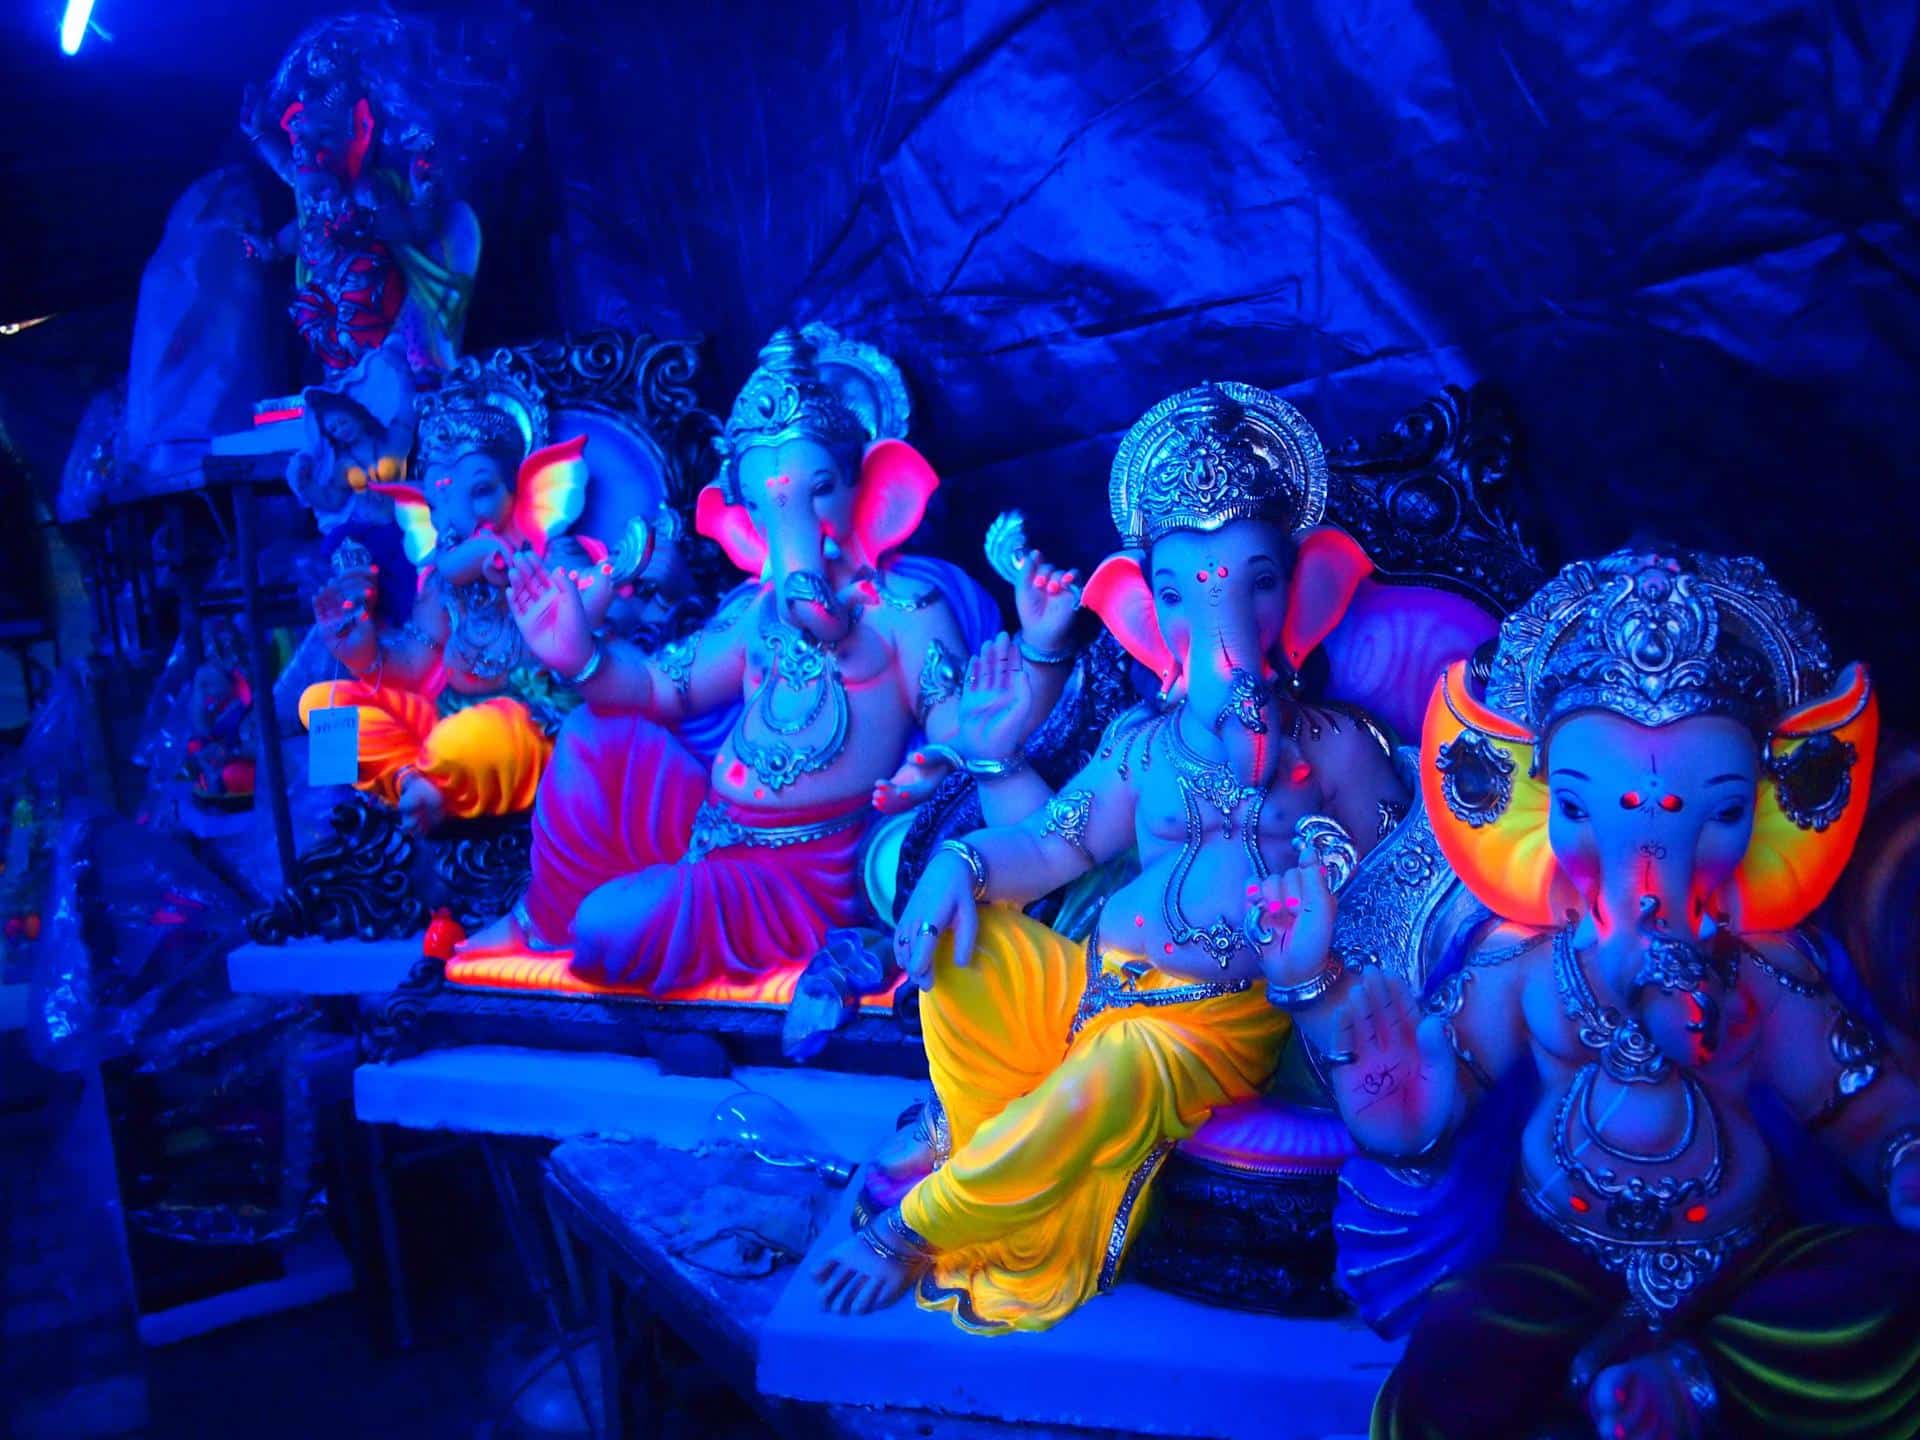 The Elephant-Headed God’s Festival – Ganesh Chaturthi